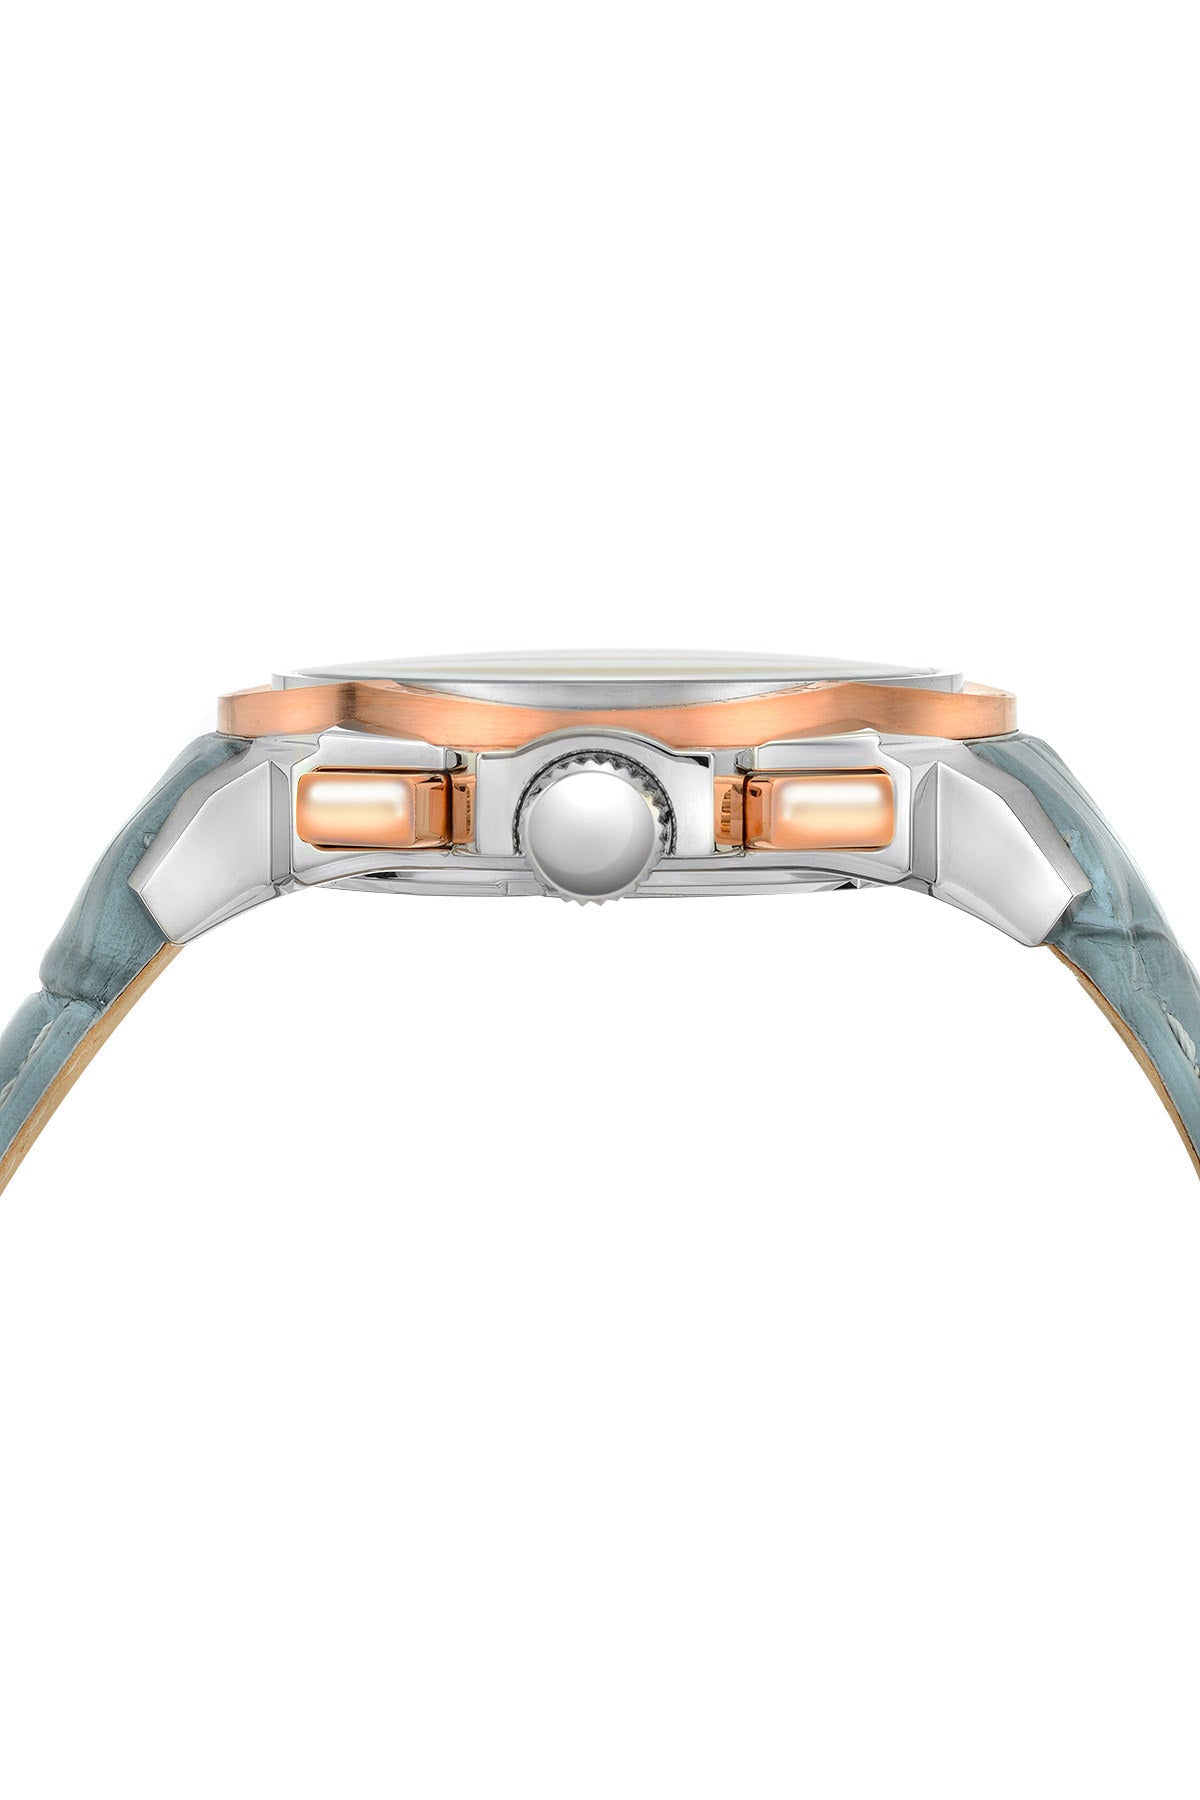 Porsamo Bleu Olivier luxury chronograph men's watch, genuine leather band, rose, grey 322AOLL